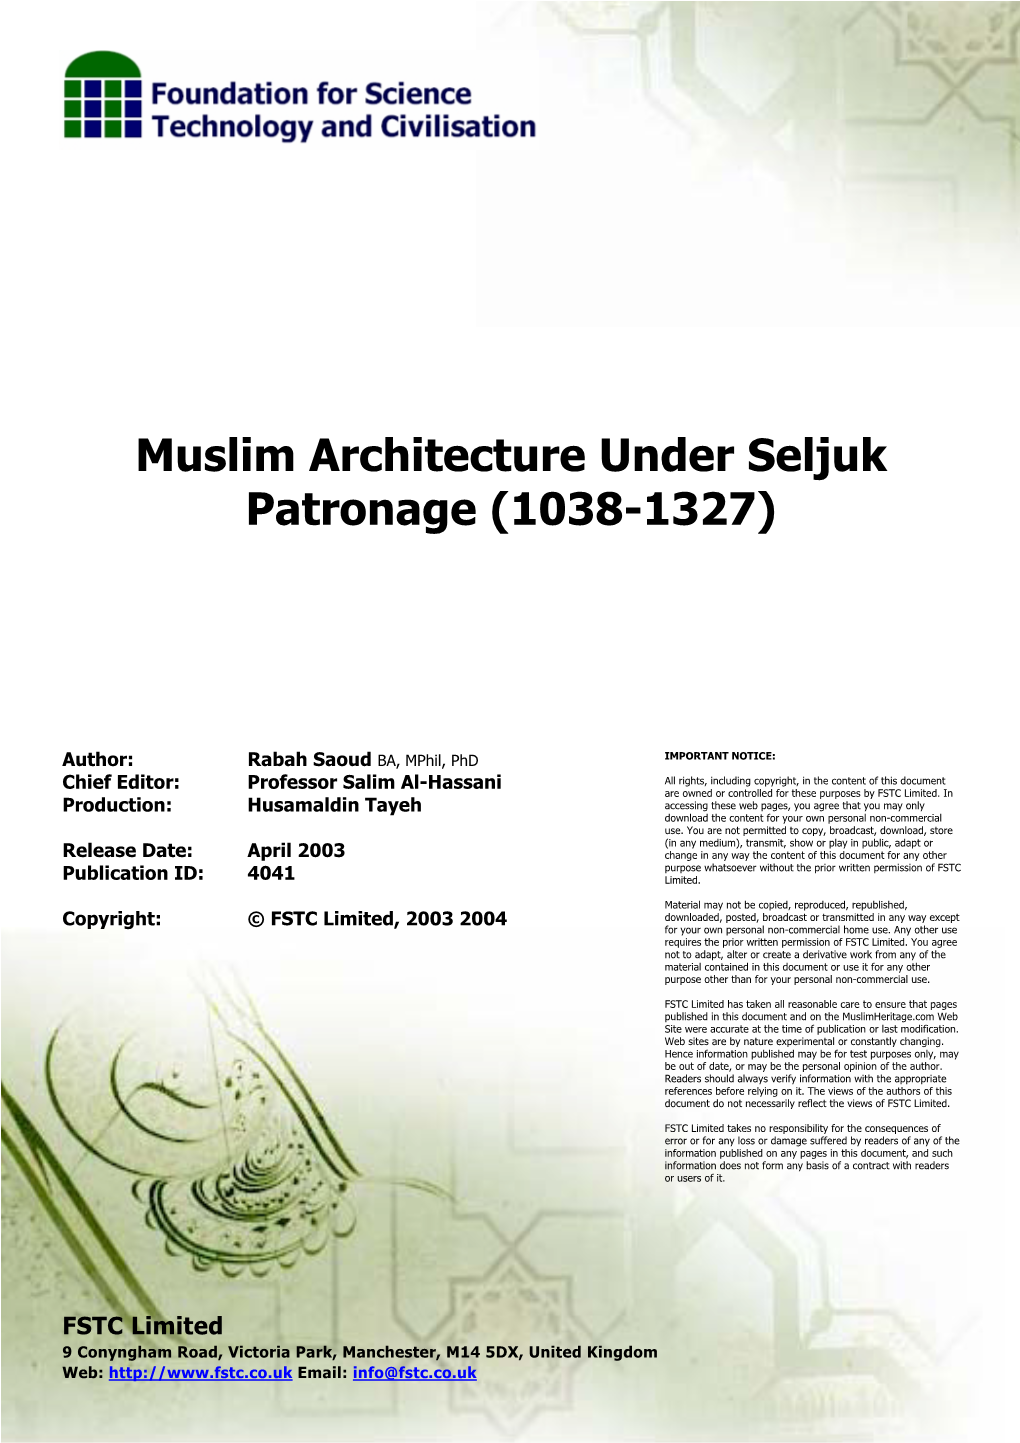 Muslim Architecture Under Seljuk Patronage (1038-1327)